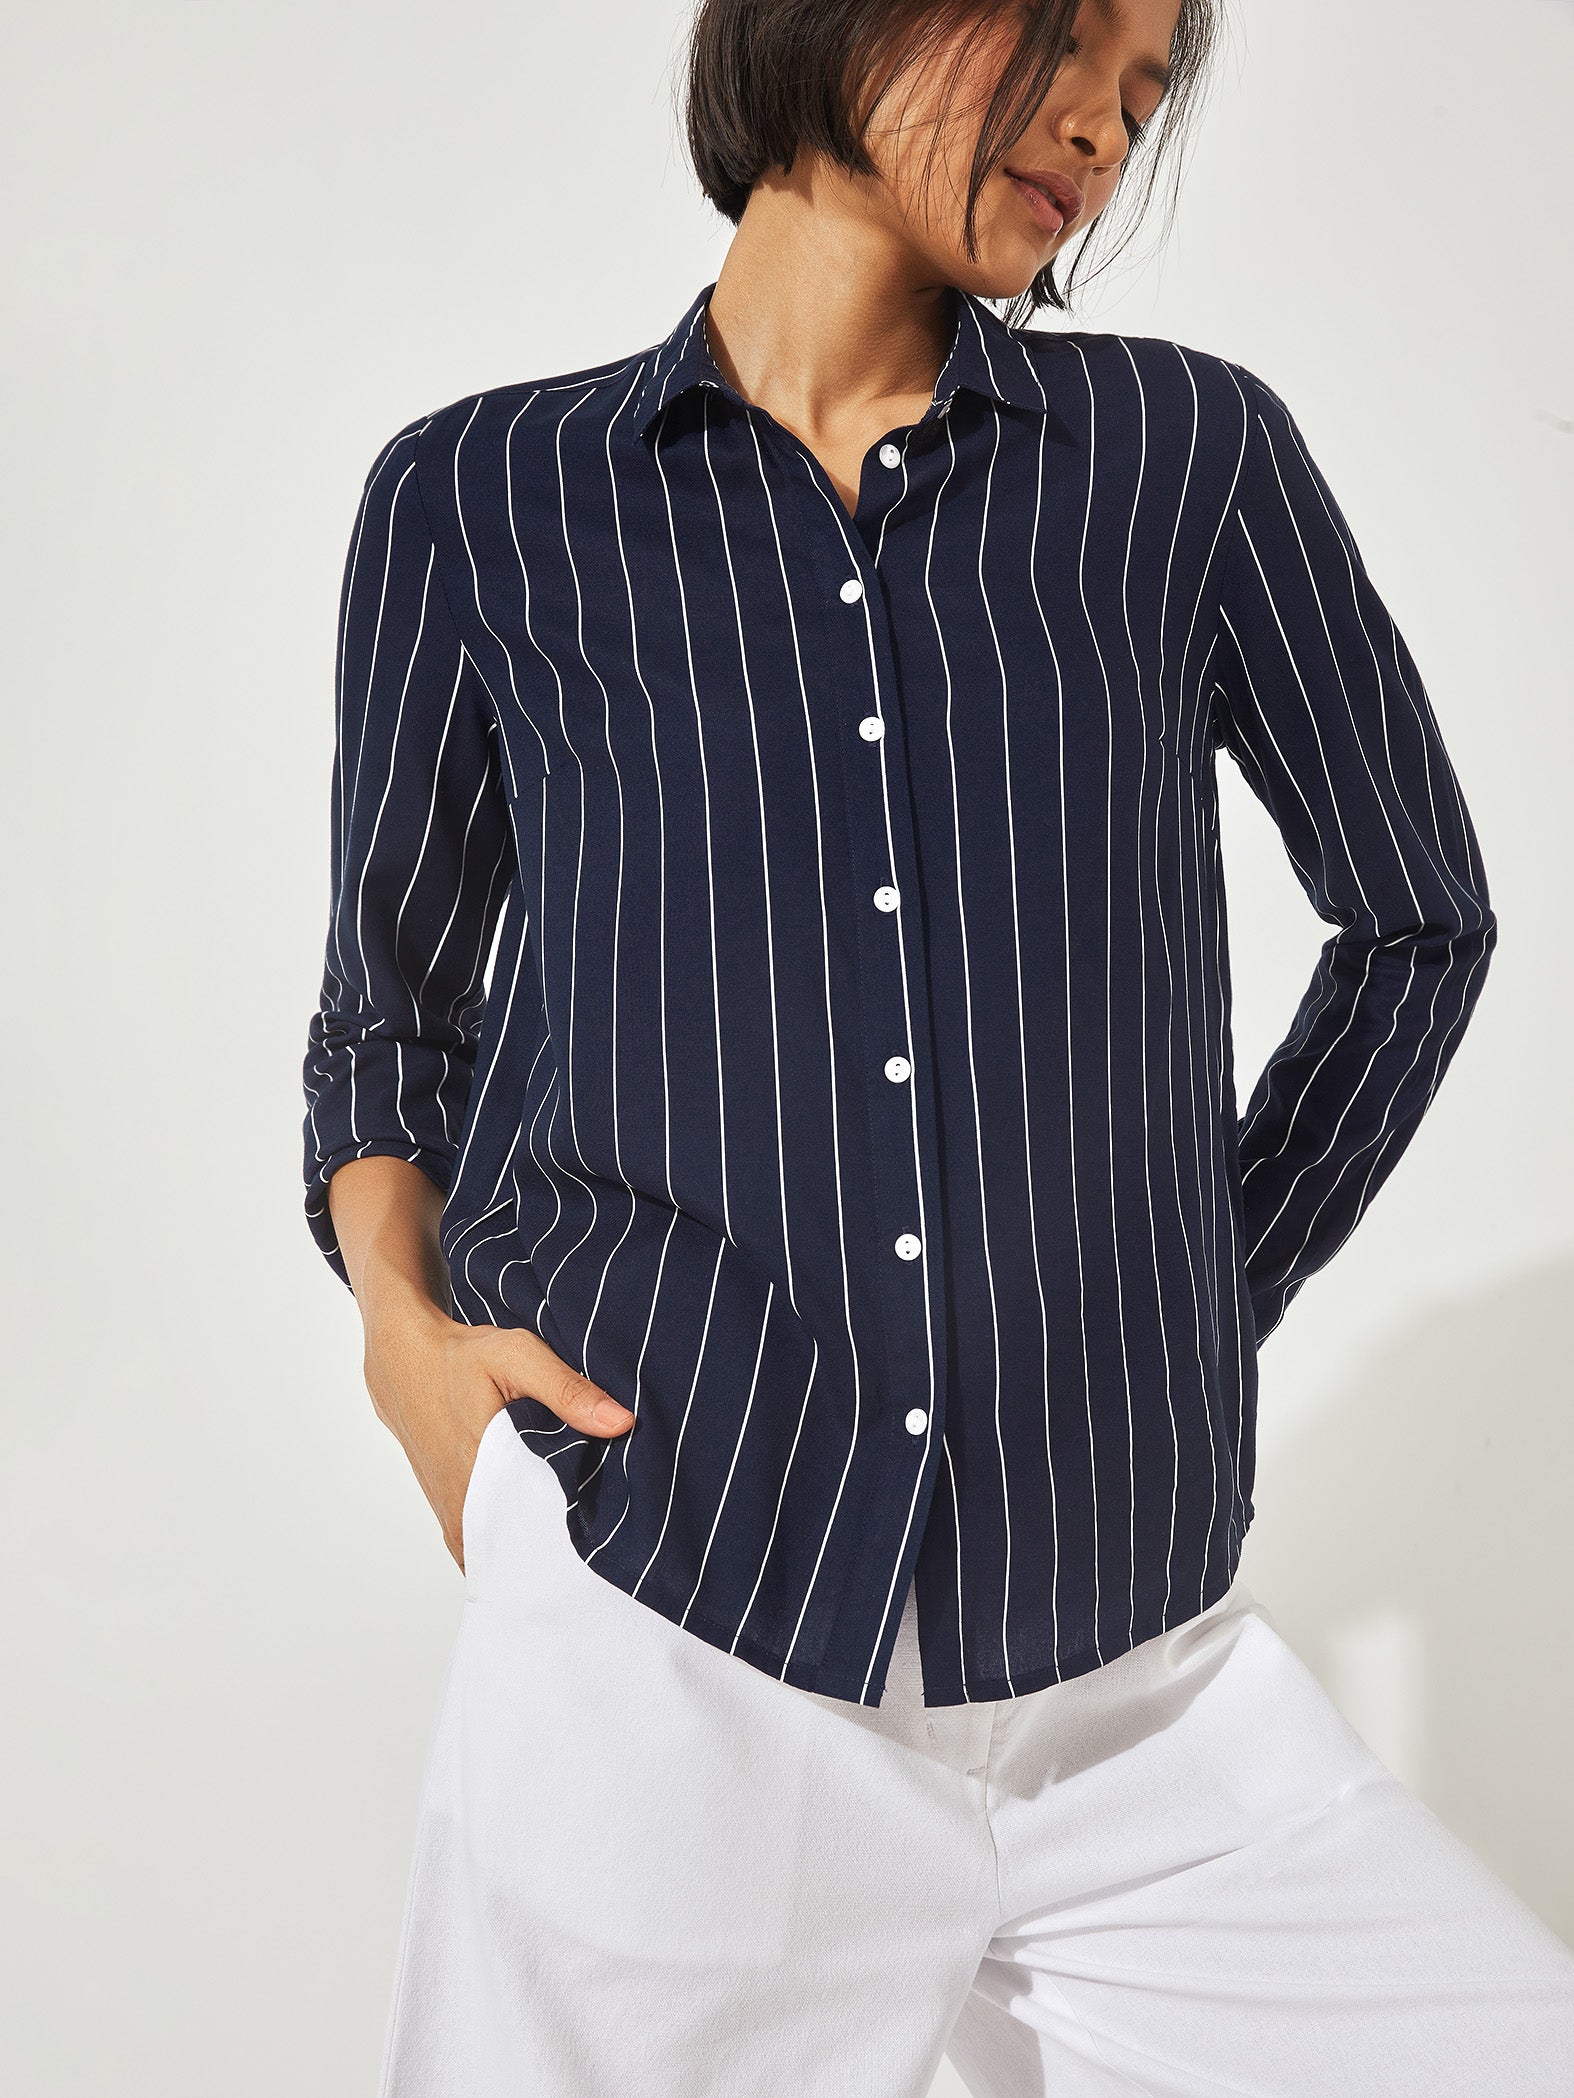 Navy & White Striped Shirt